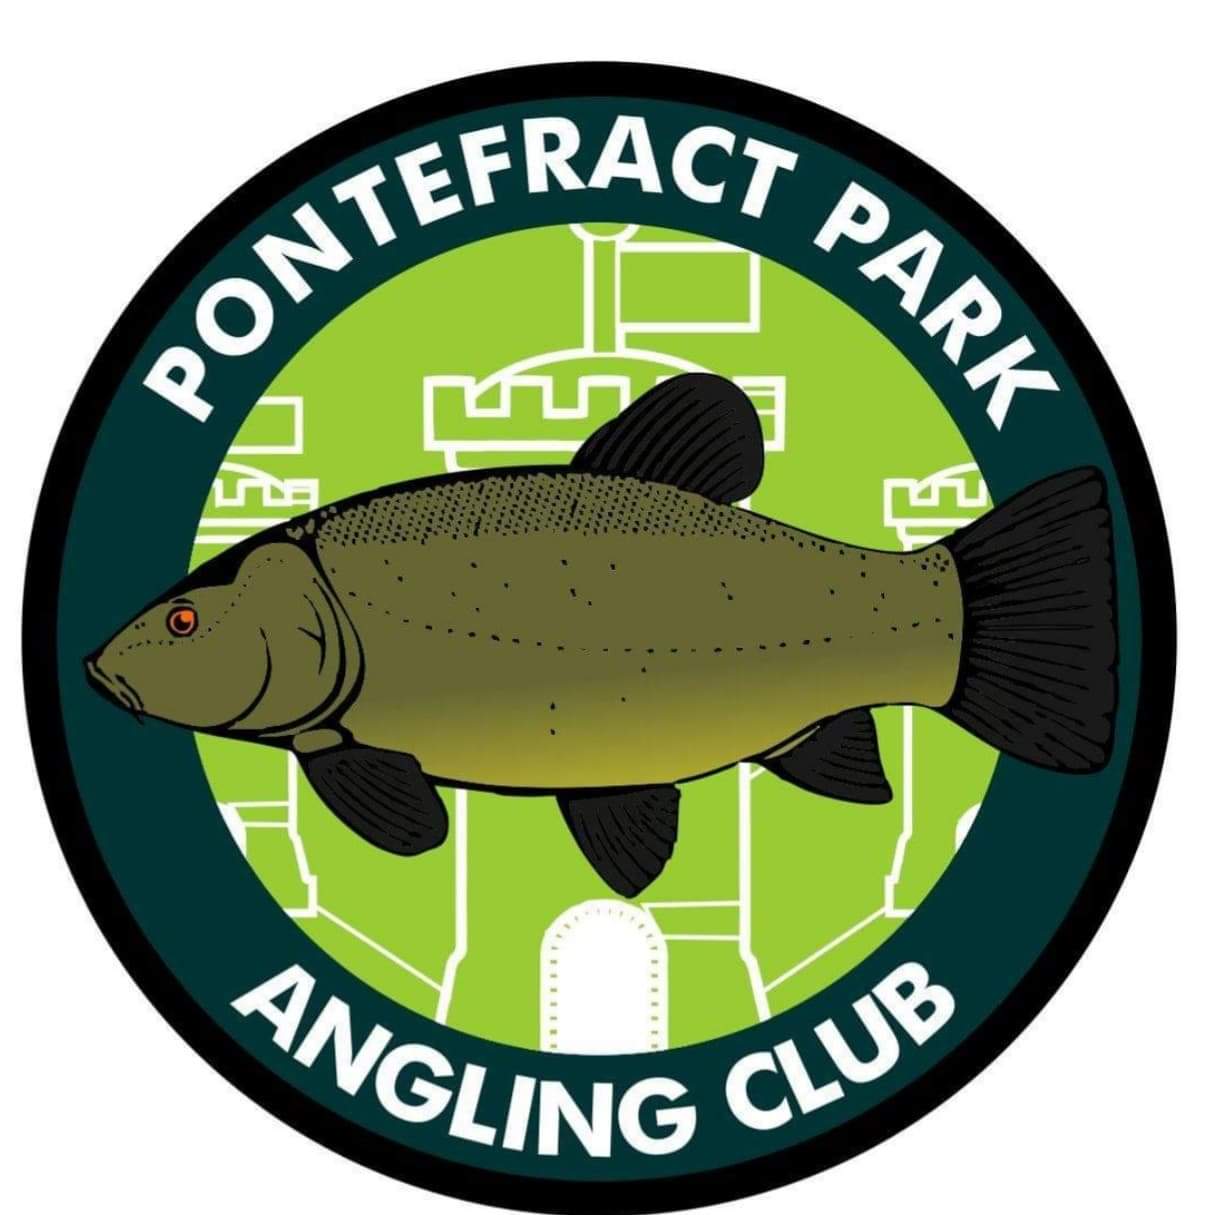 Pontefract Park angling club